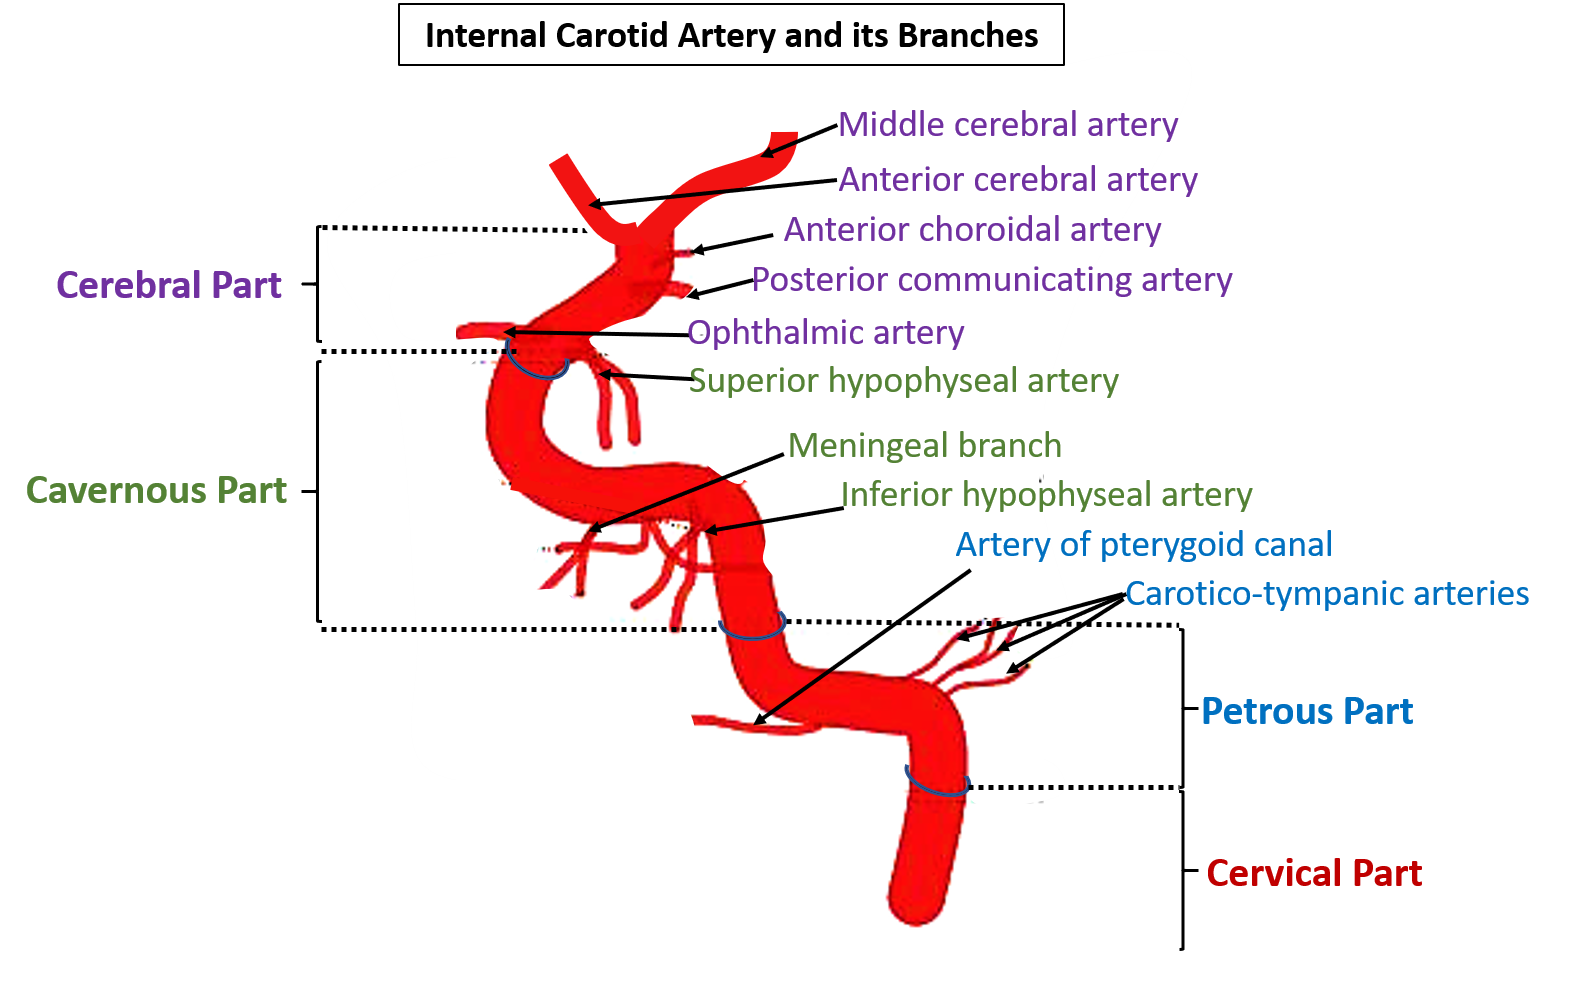 Branches of internal carotid artery